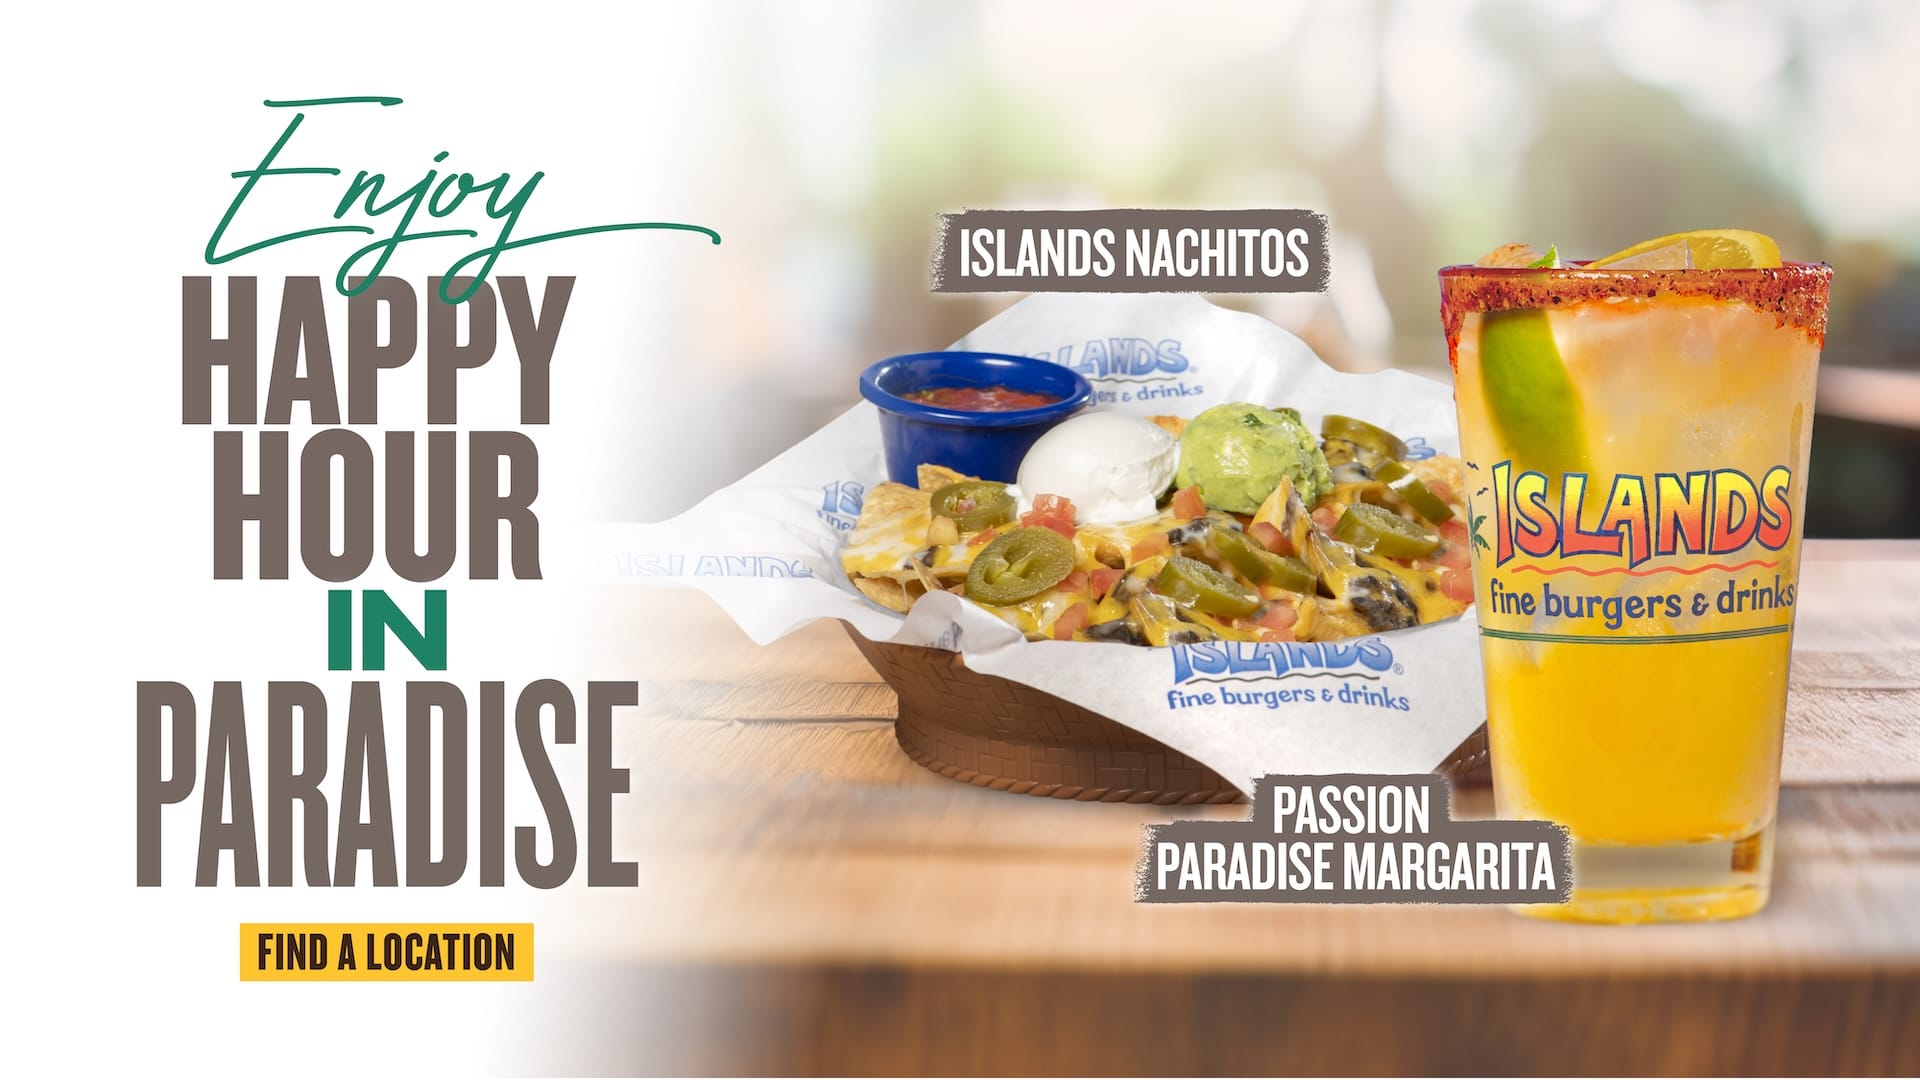 Enjoy Happy Hour in Paradise - Find Location - Islands Nachitos - Passion Paradise Margarita